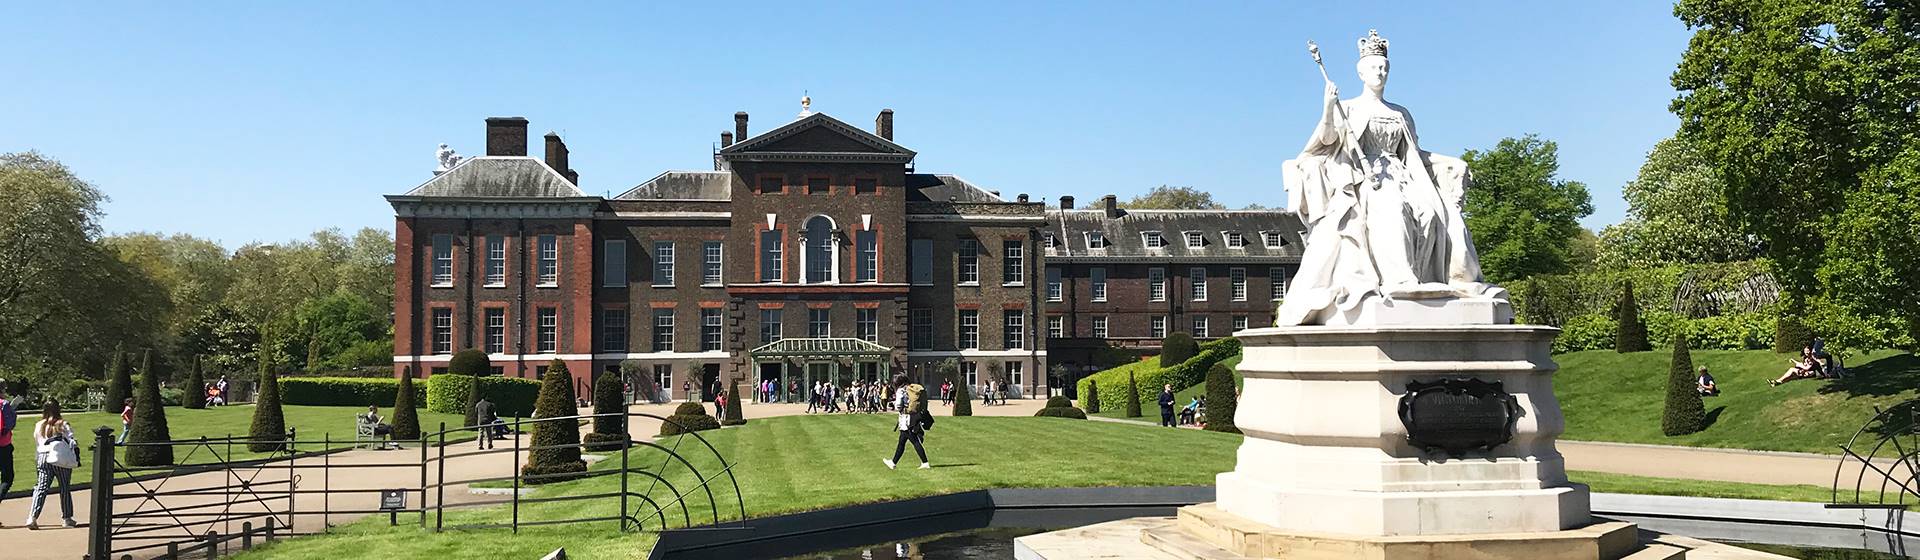 Kensington Palace - Optimum Experience